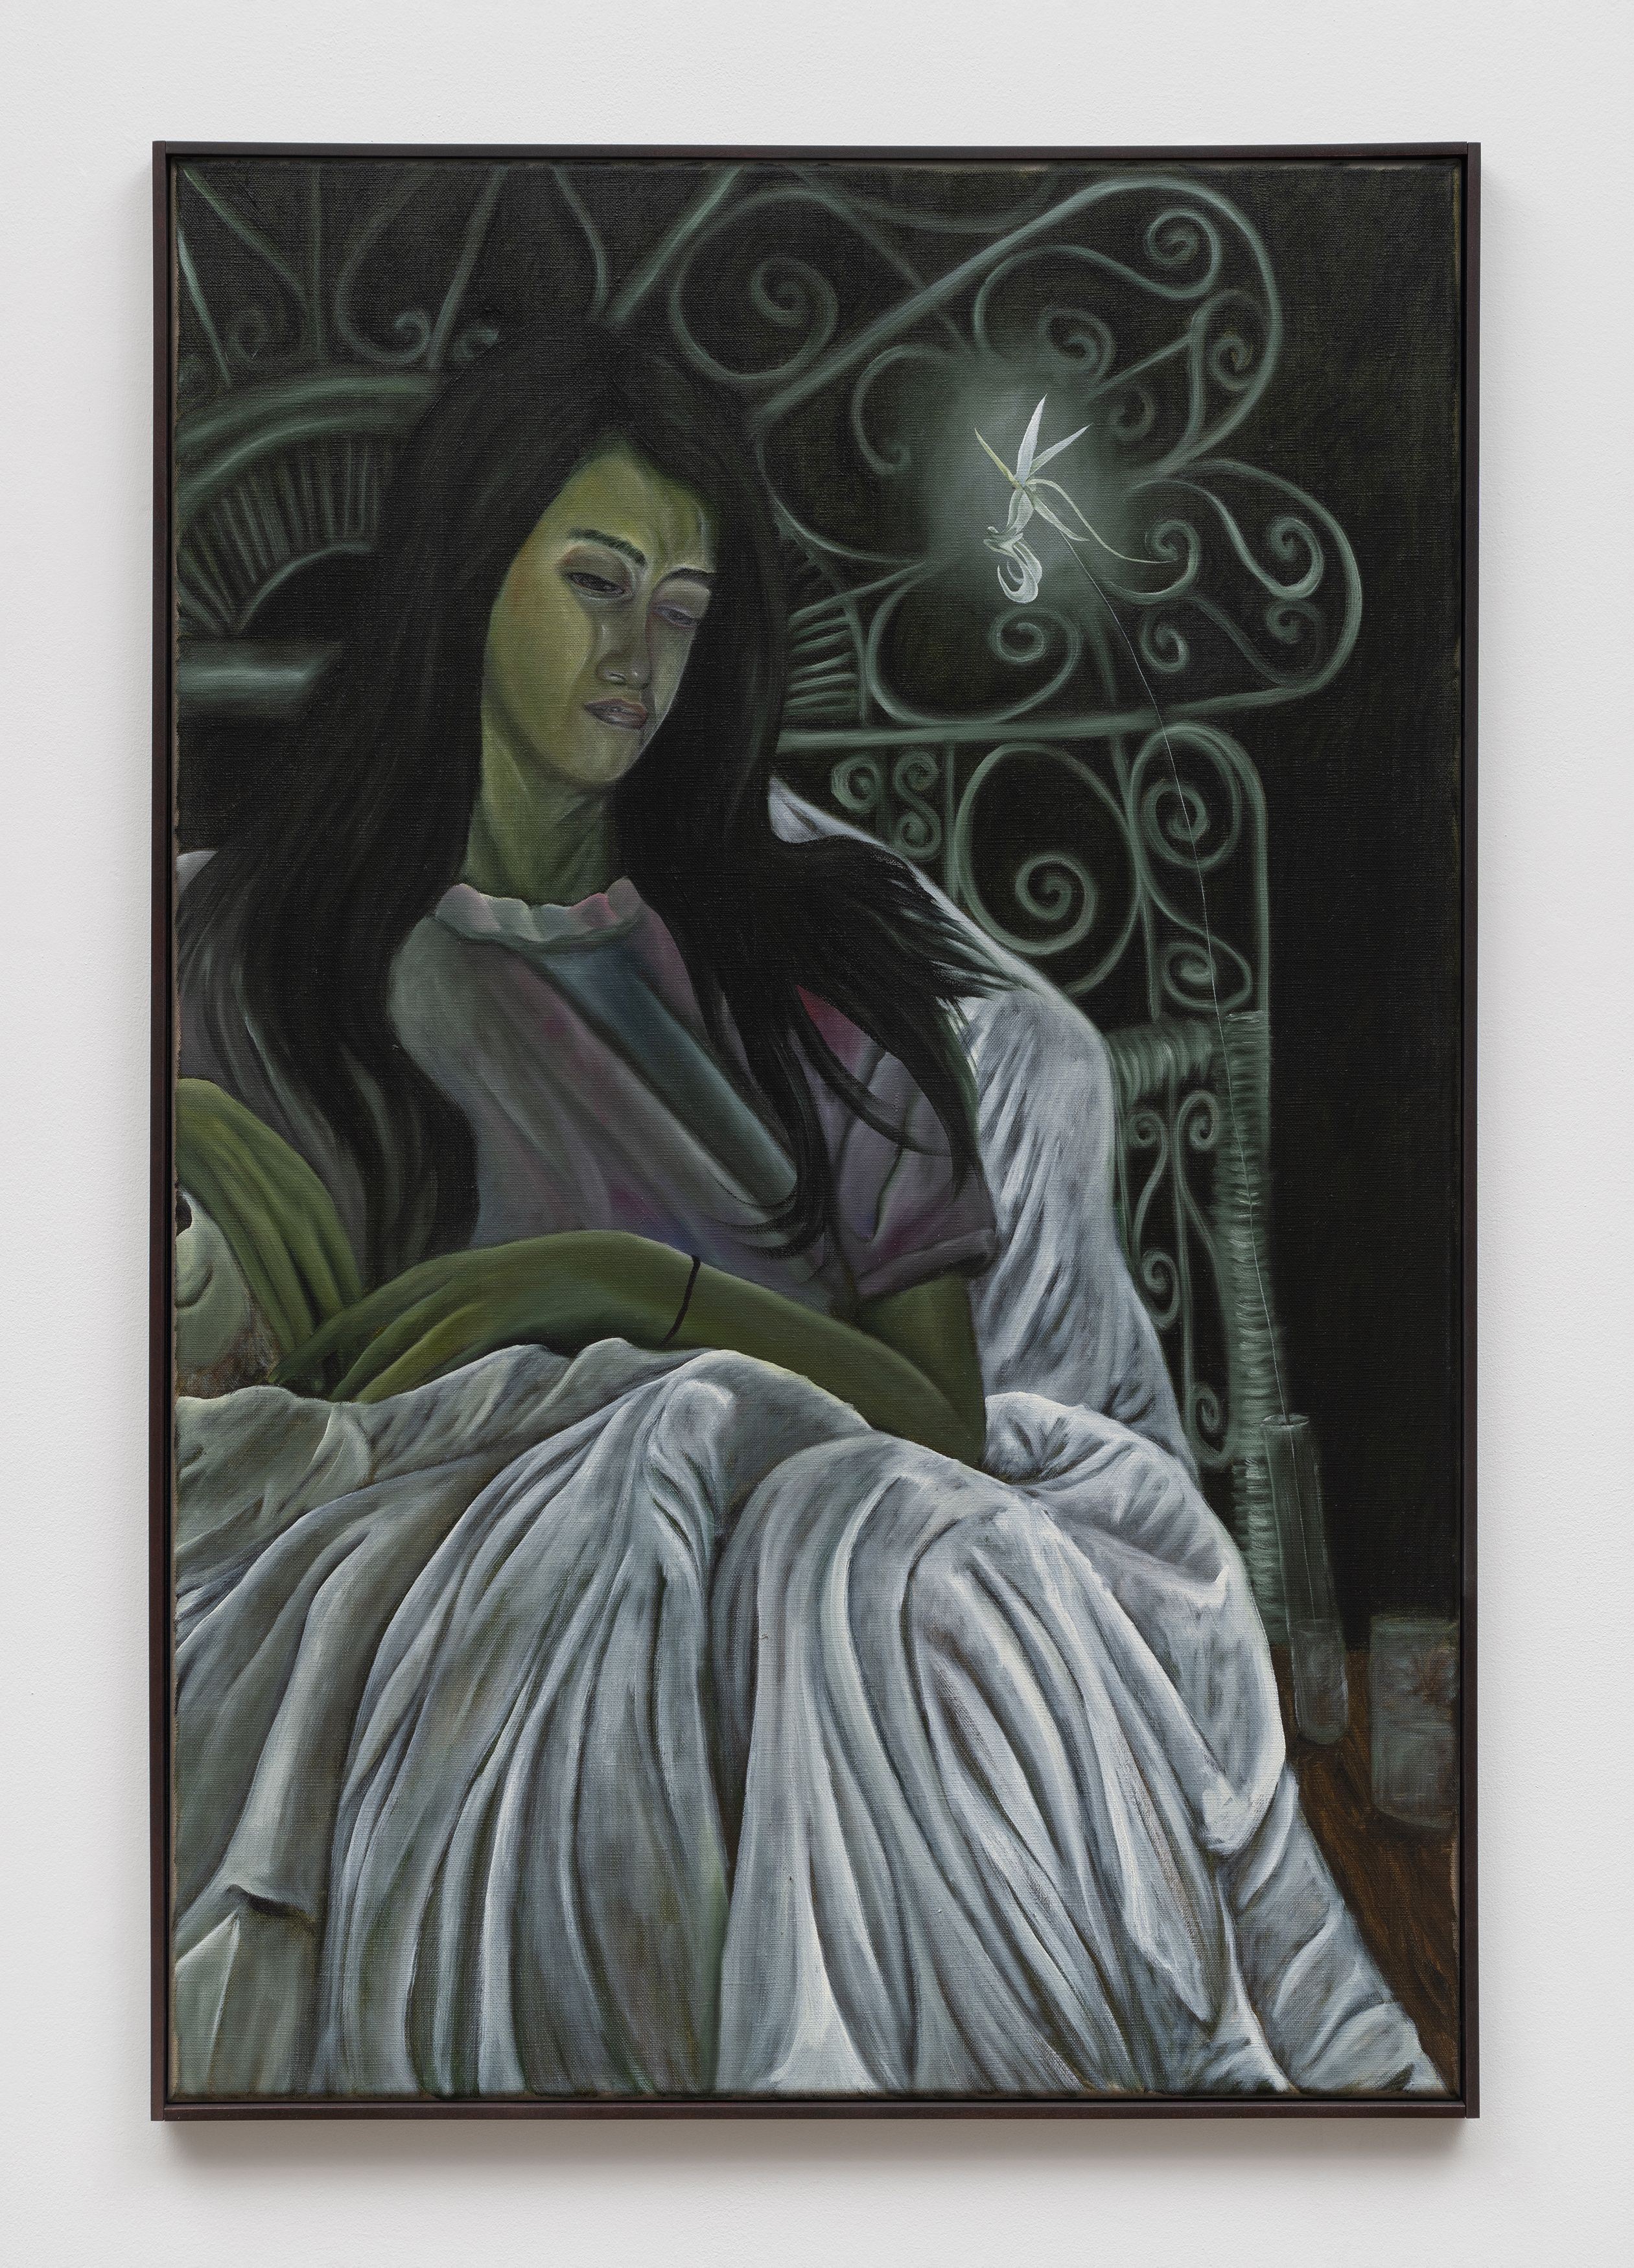 Srijon Chowdhury, Sick Girl, 2021, oil on linen, 36 x 24 in. (91.44 x 60.96 cm)